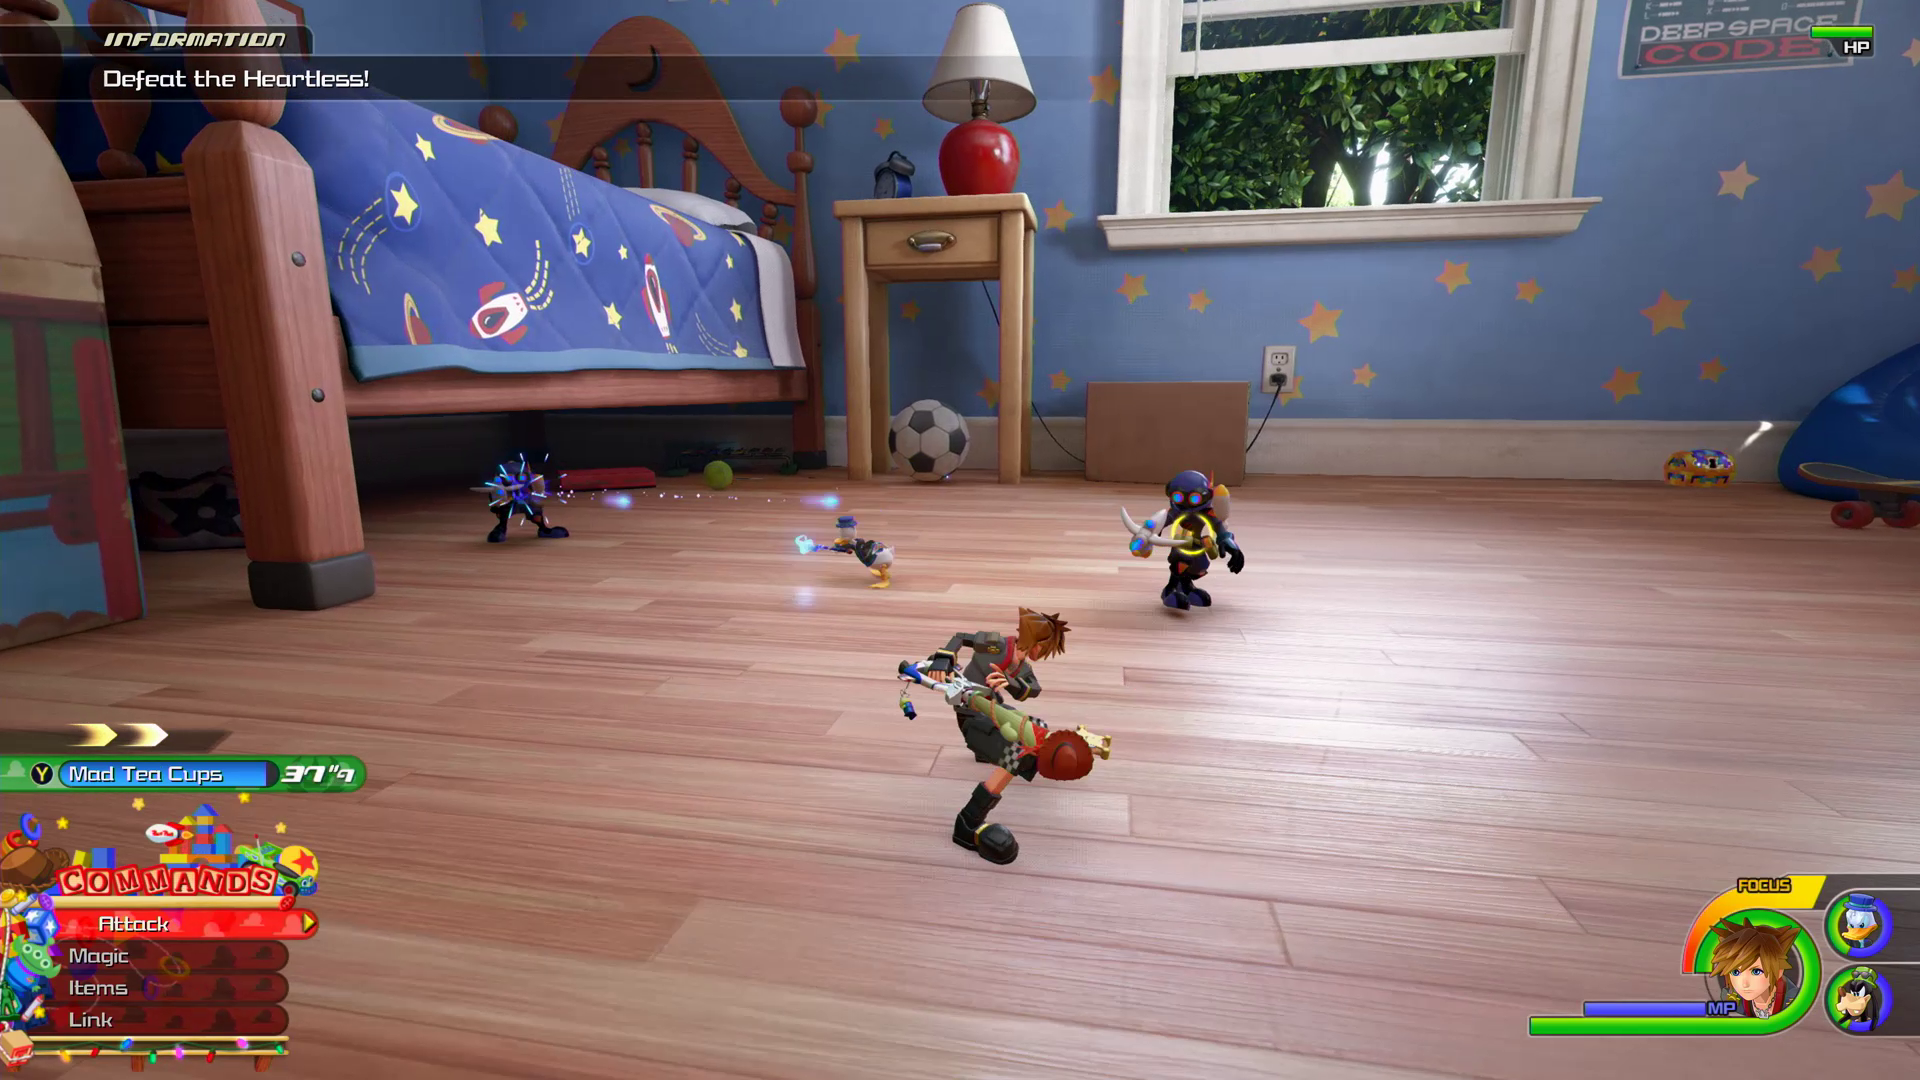 Kingdom Hearts 3 gameplay world premiere: Pixar's magic even works